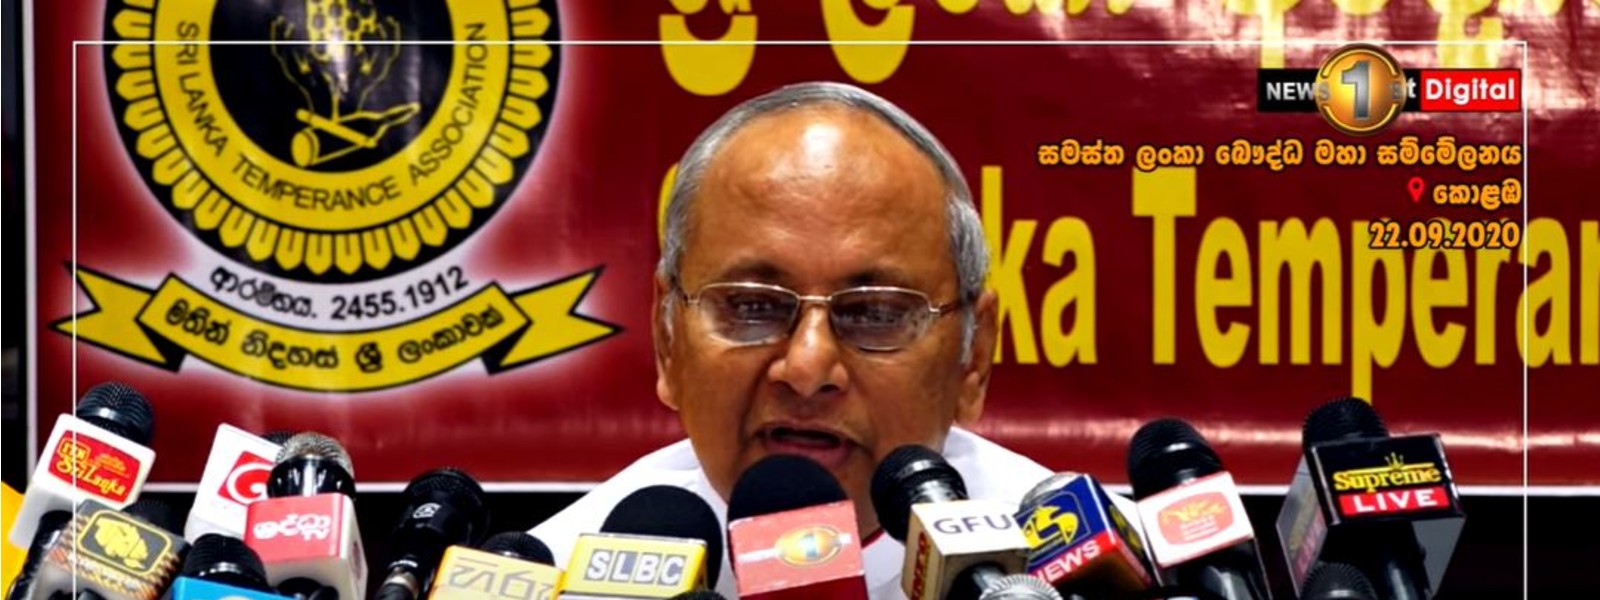 Temperance movement in Sri Lanka says NO to marijuana legalization